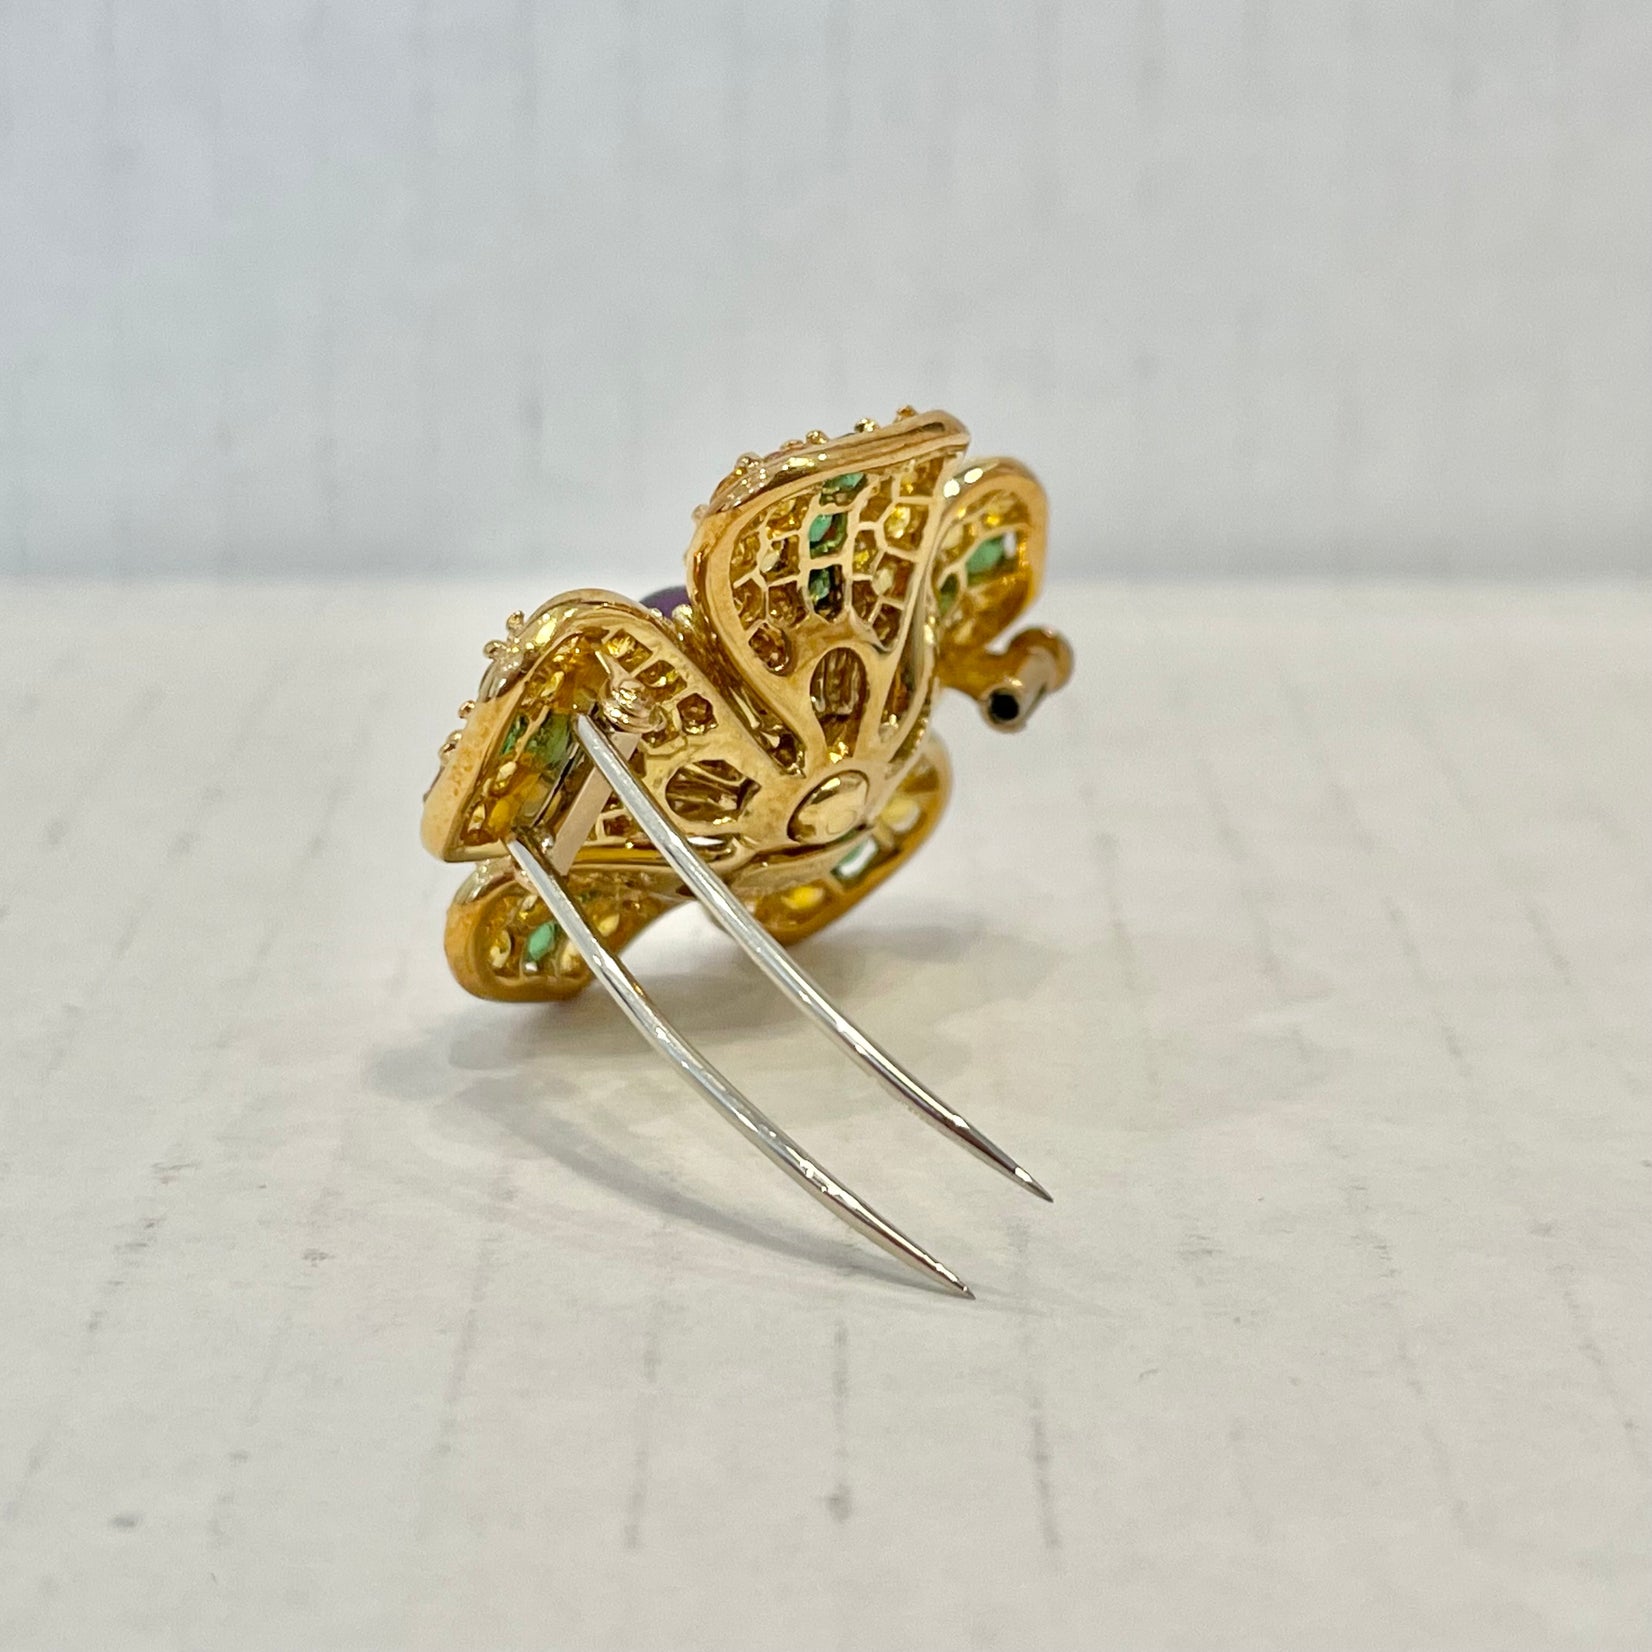 Tiffany & Co. Magnolia Pin in 18 Karat Yellow Gold